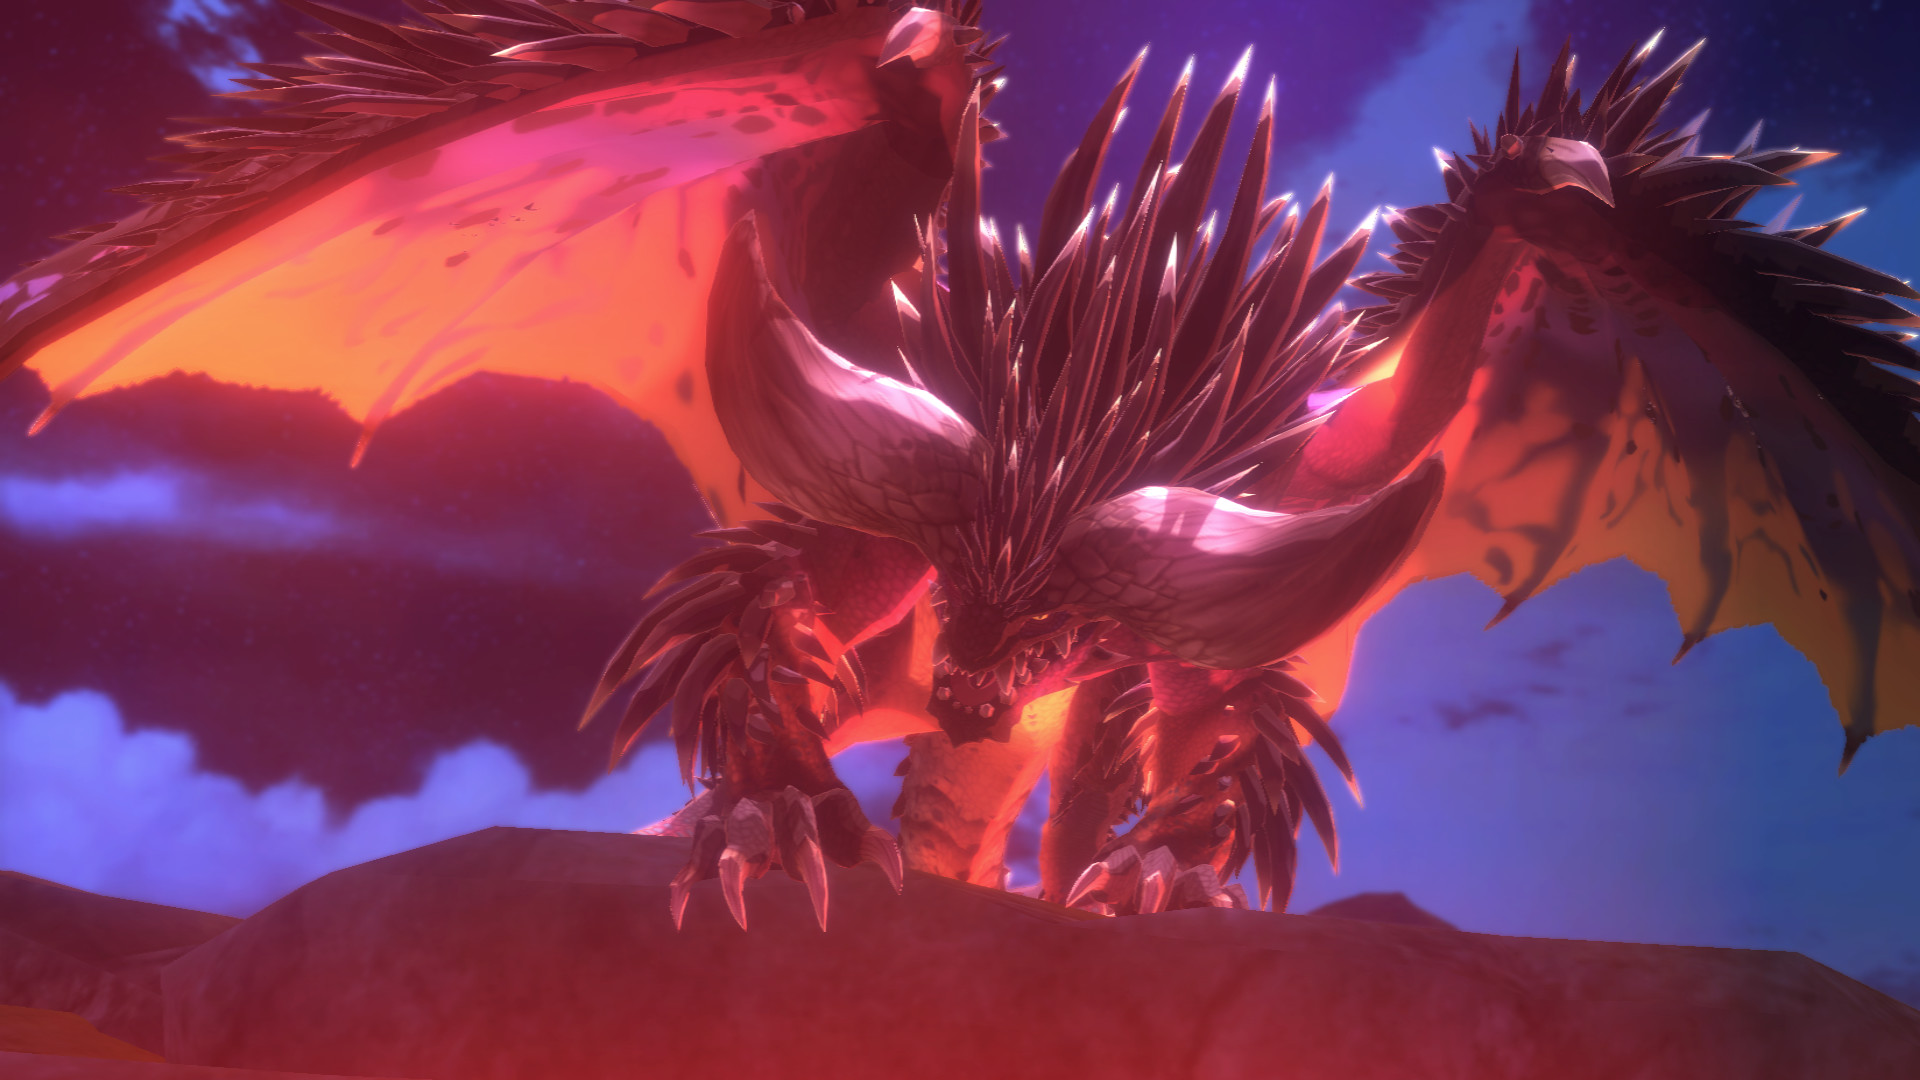 Monster Hunter Stories 2: Wings of Ruin Free Download